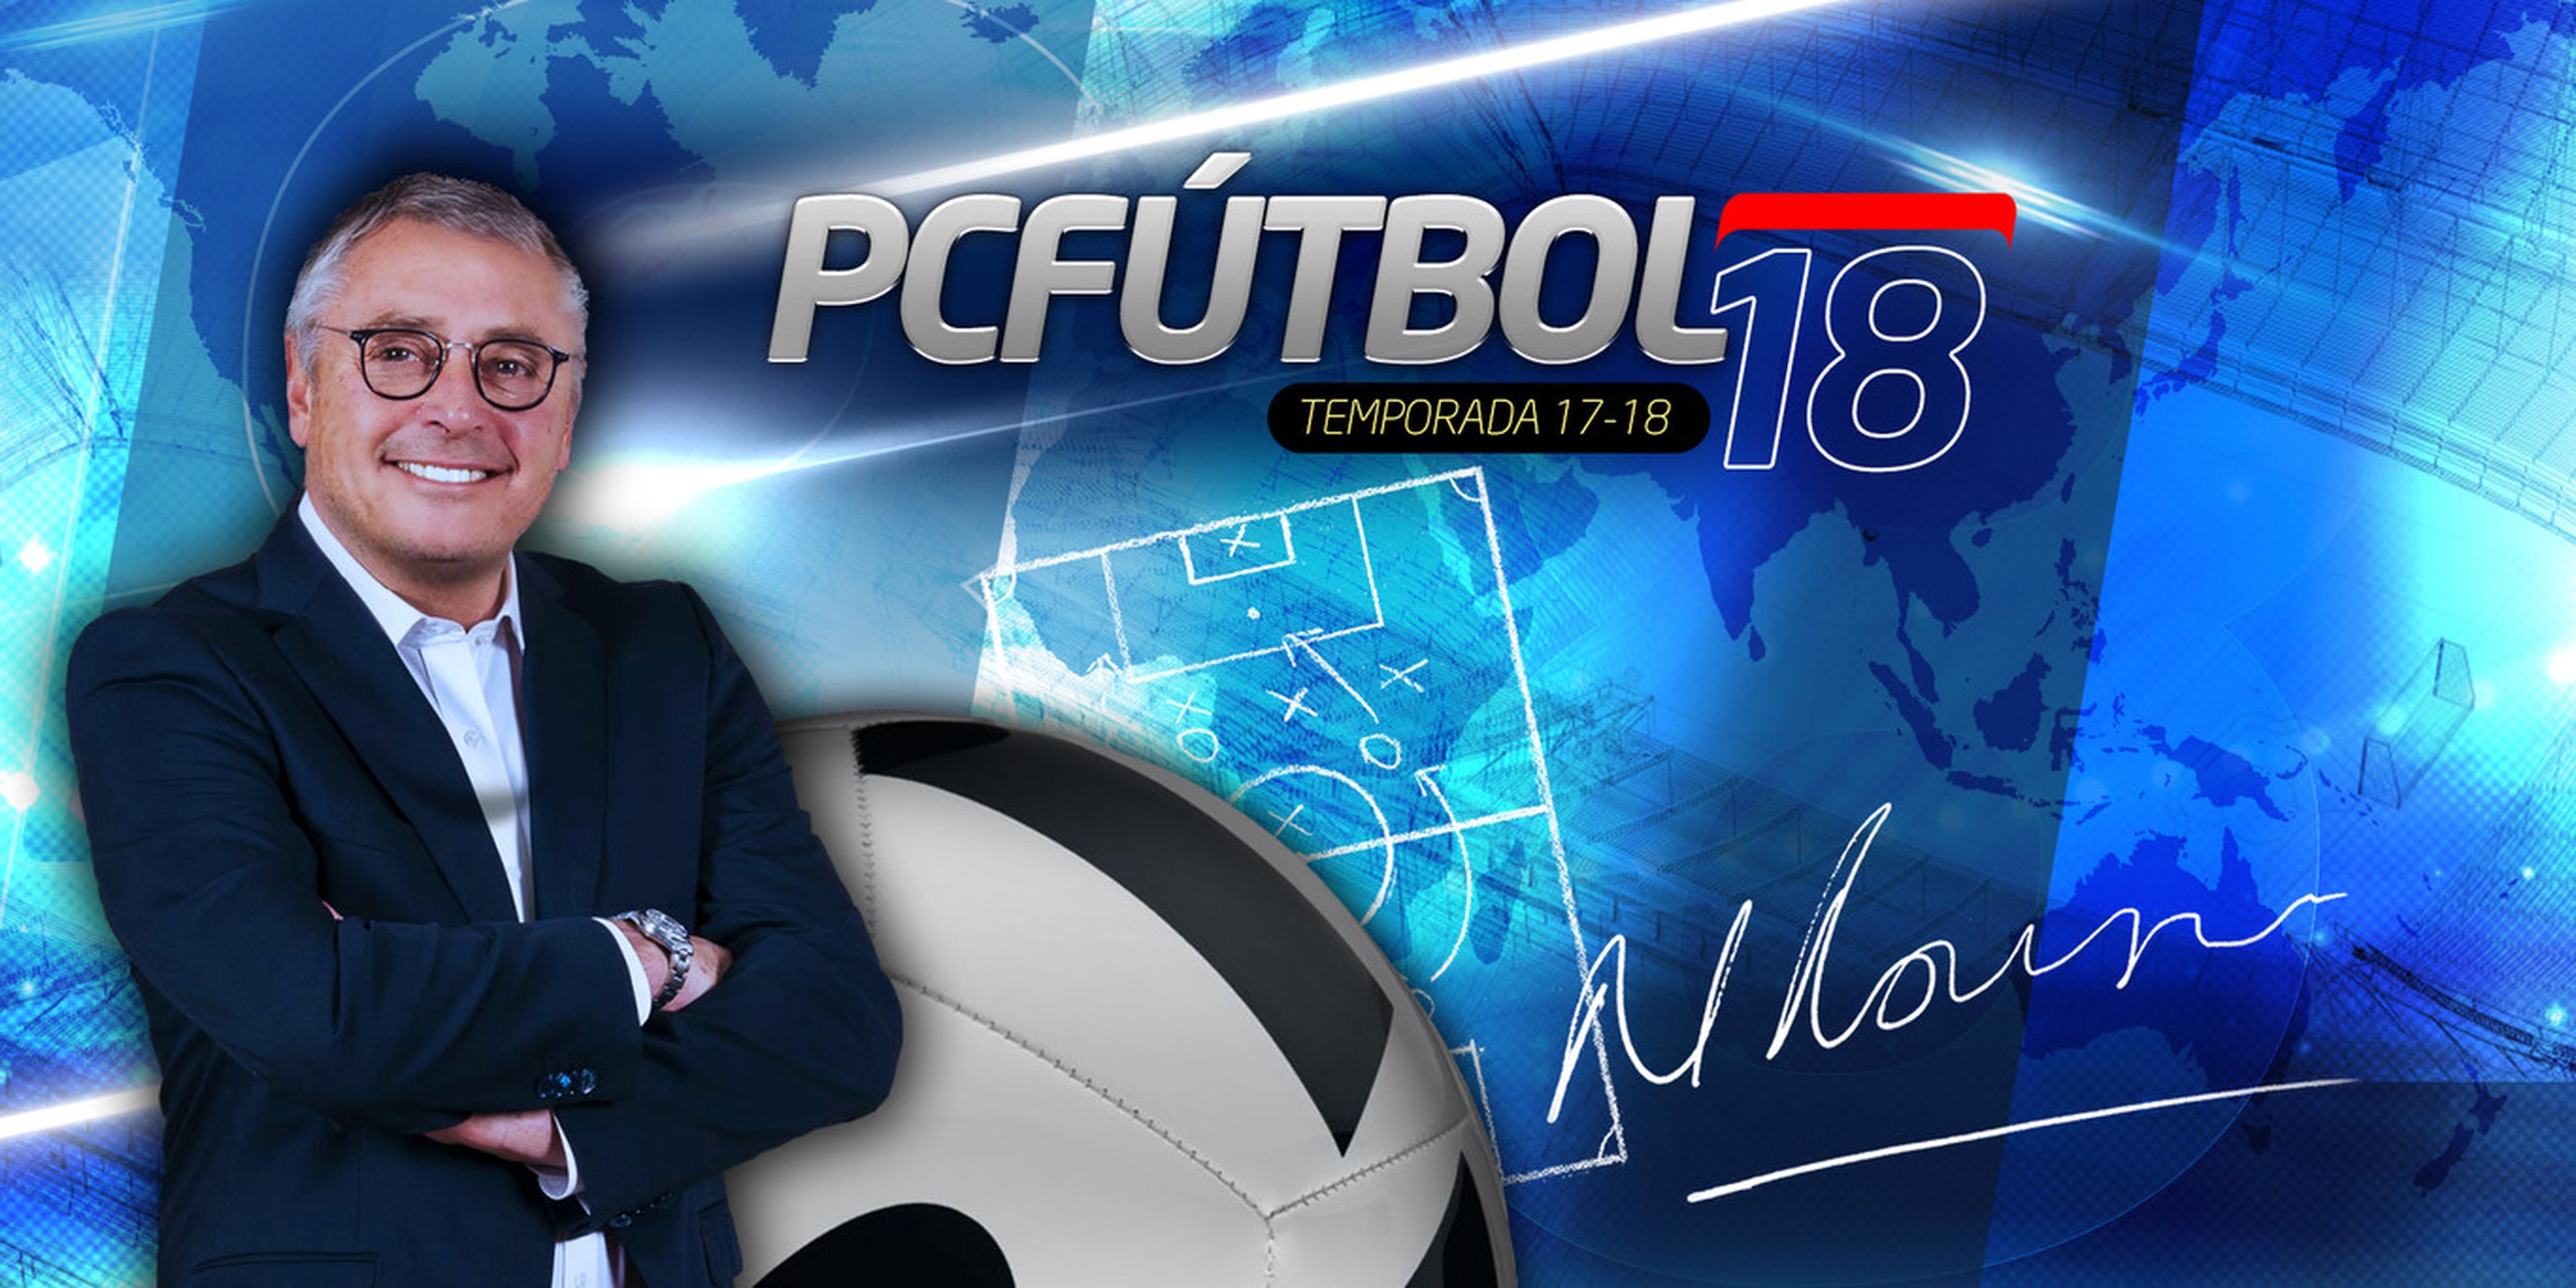 Michael Robinson - PC Futbol